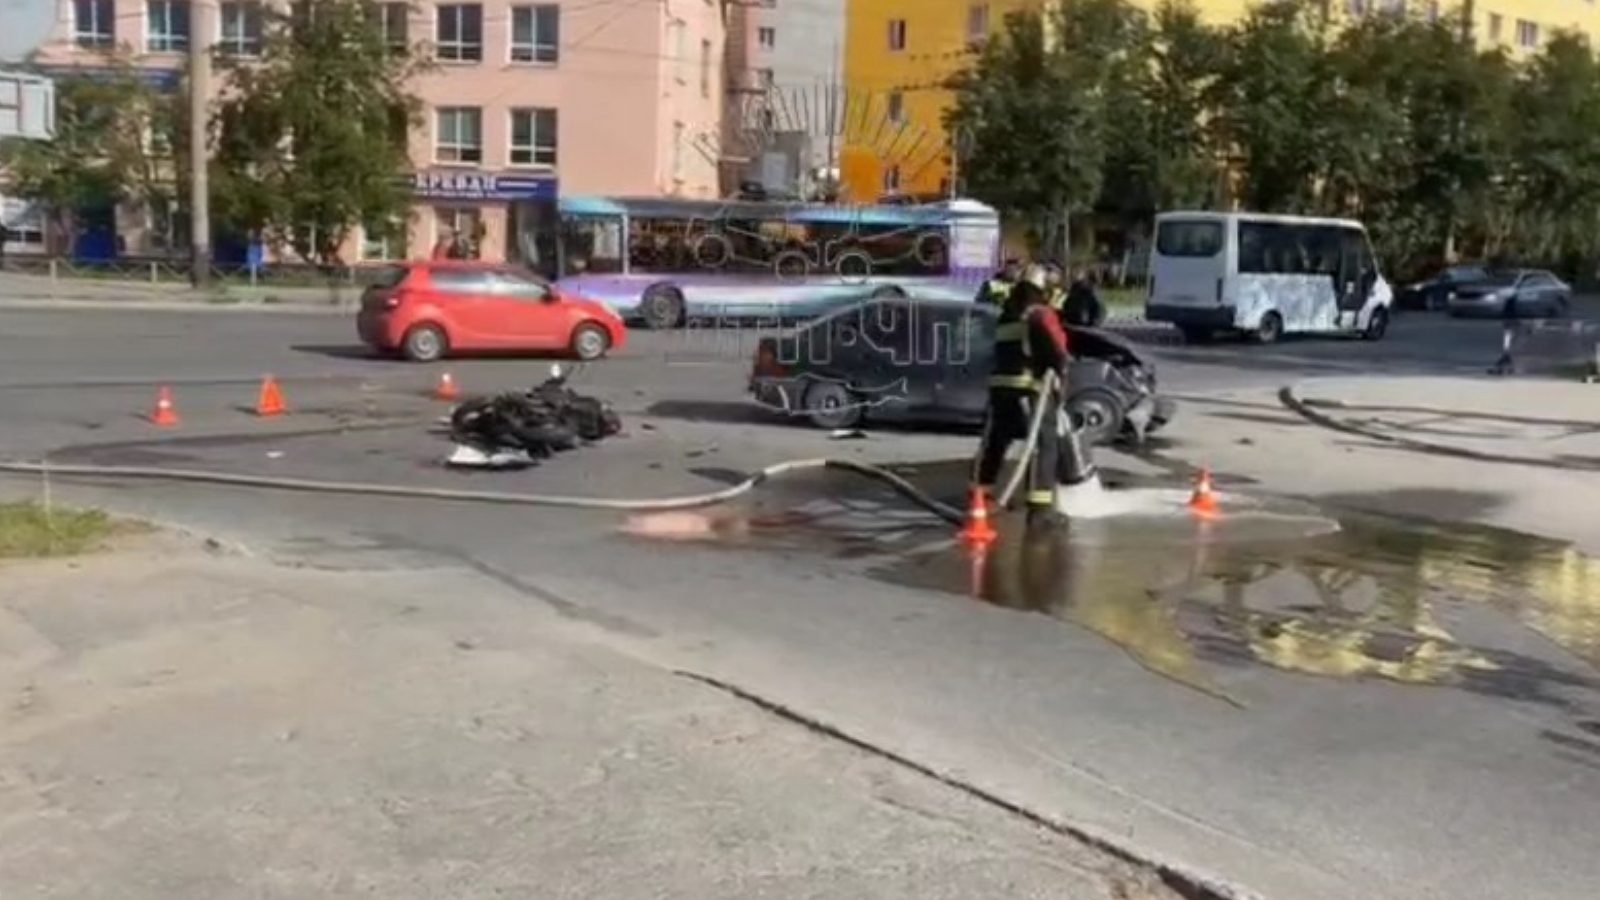 Момент аварии с мотоциклистом в Мурманске попал на [видео]